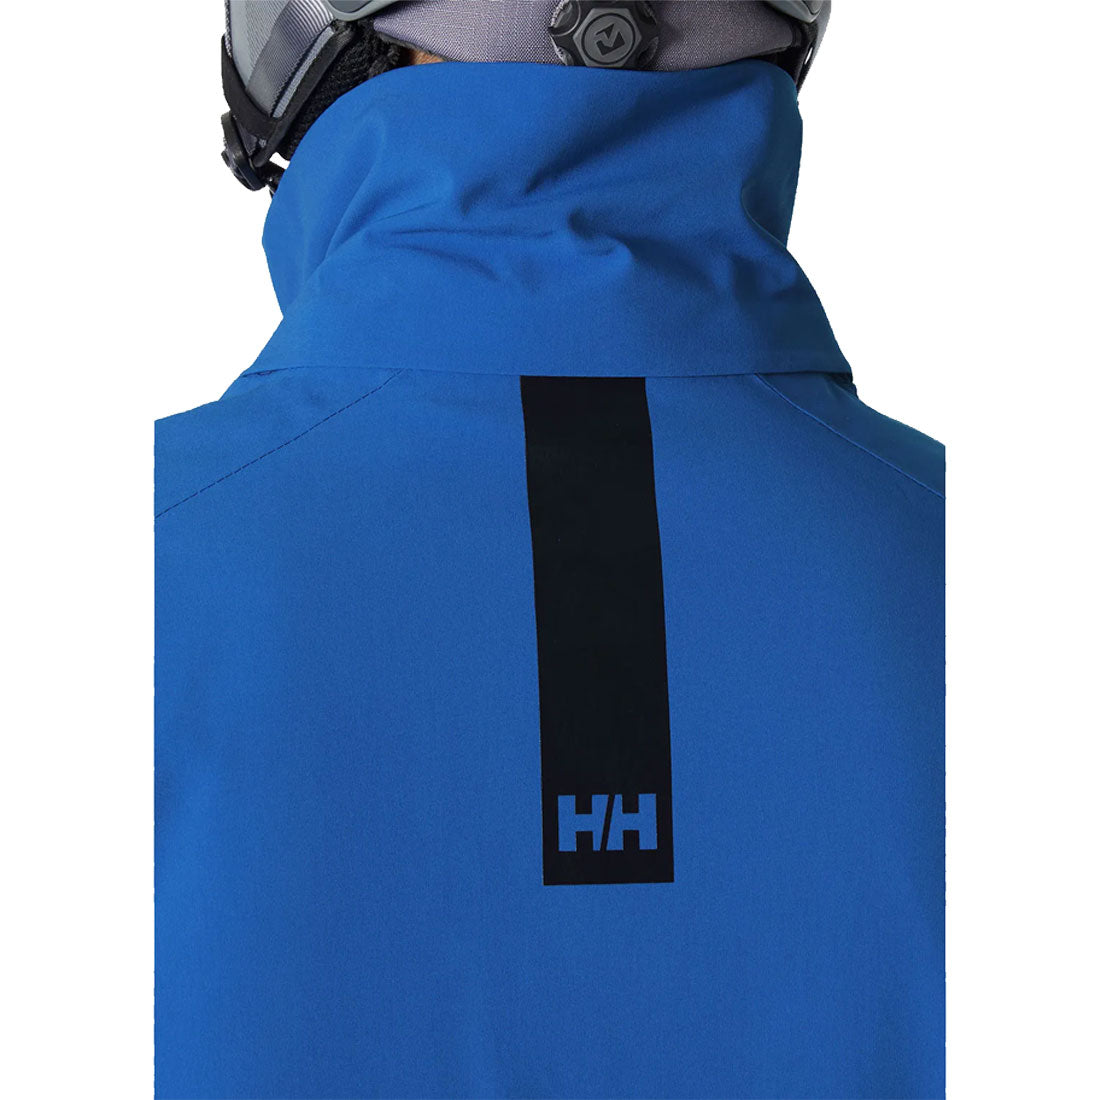 Helly Hansen Alpha 4.0 Jacket - Men's